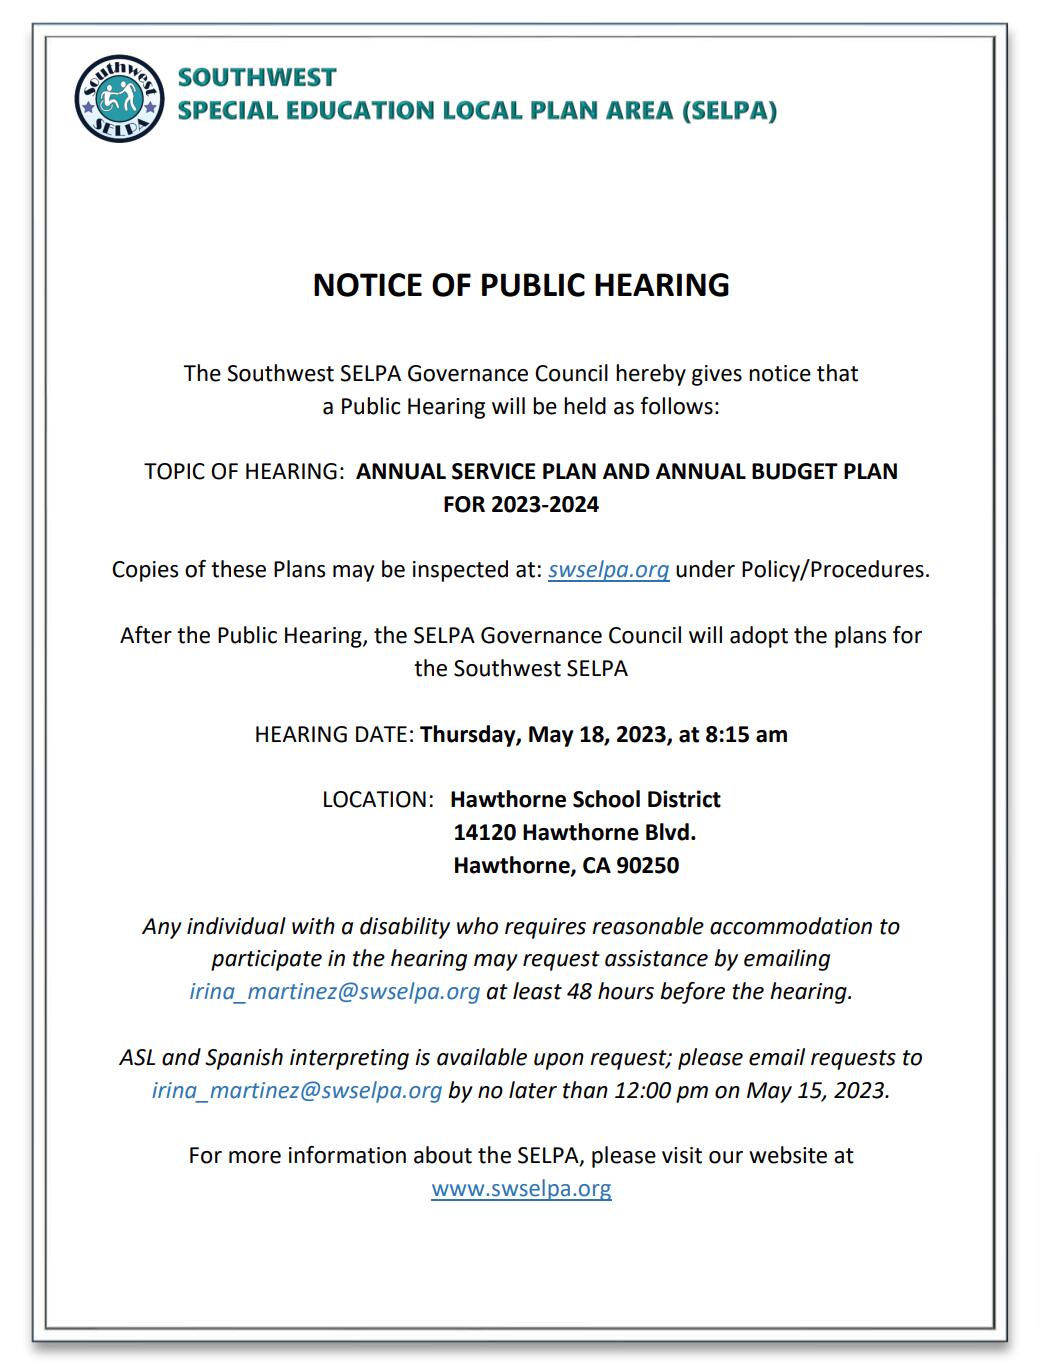 Notice of public hearing